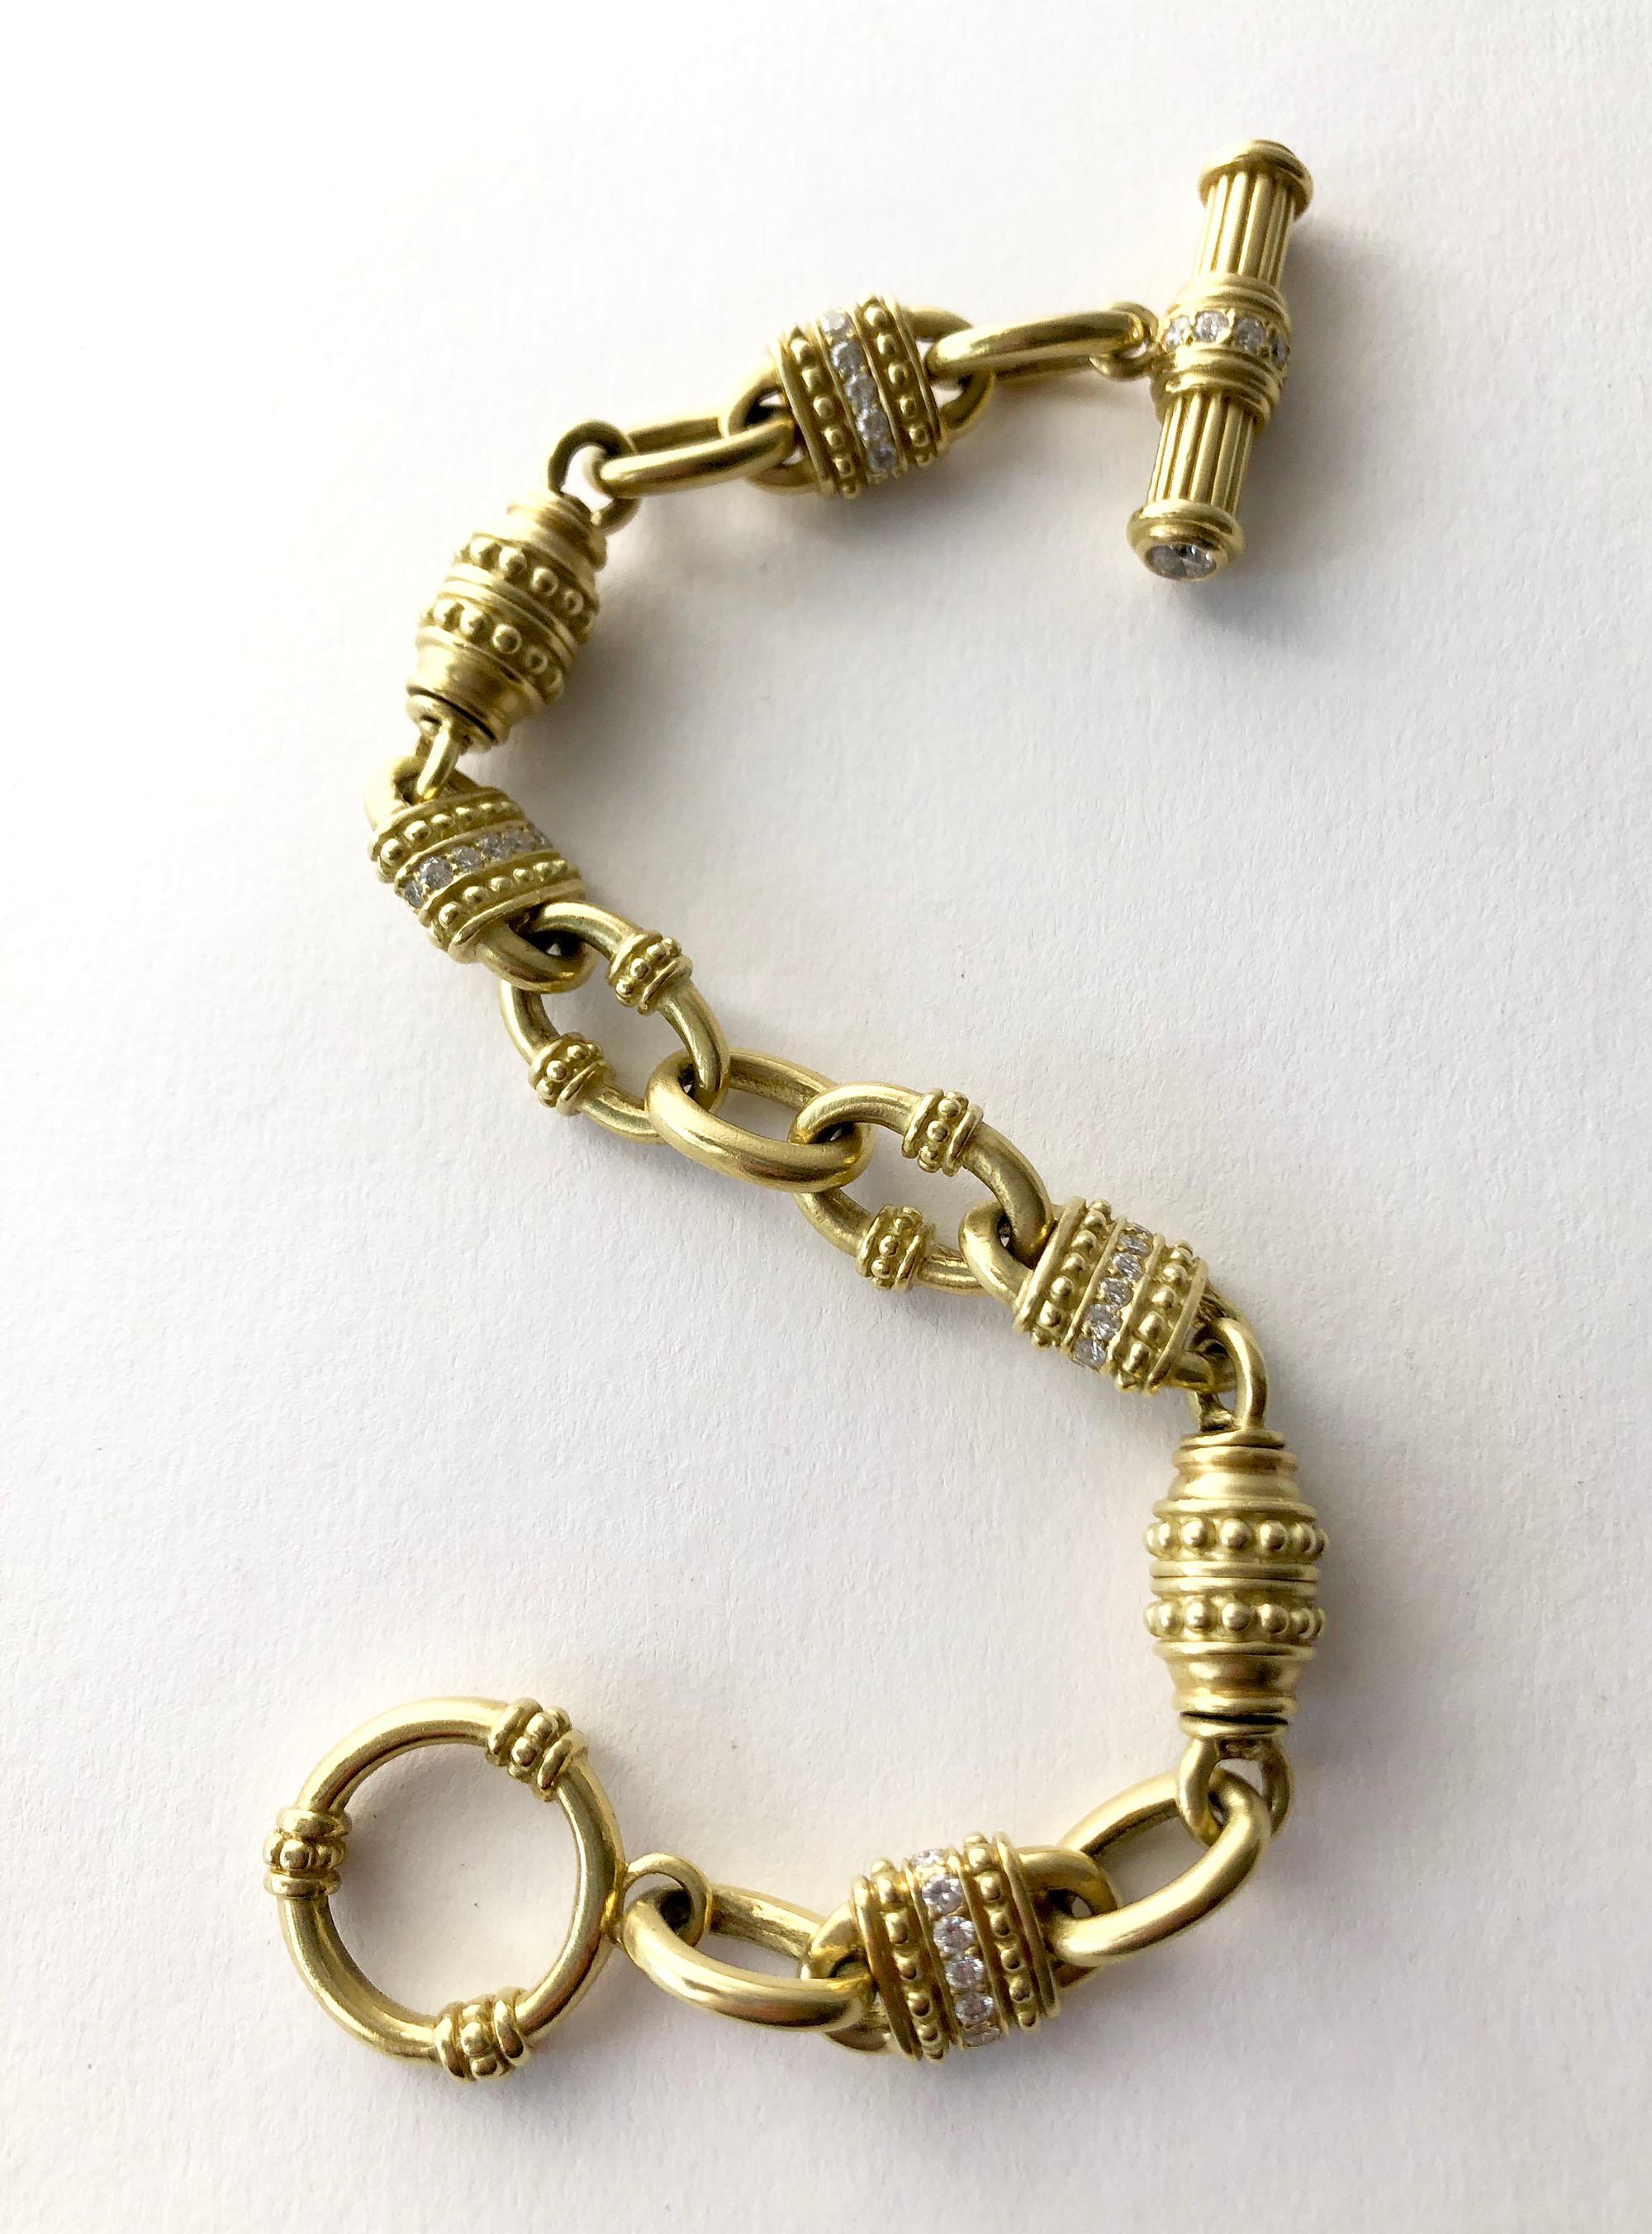 Vintage 18k gold and diamond chain link bracelet attributed to Judith Ripka.  Bracelet measures 8.5